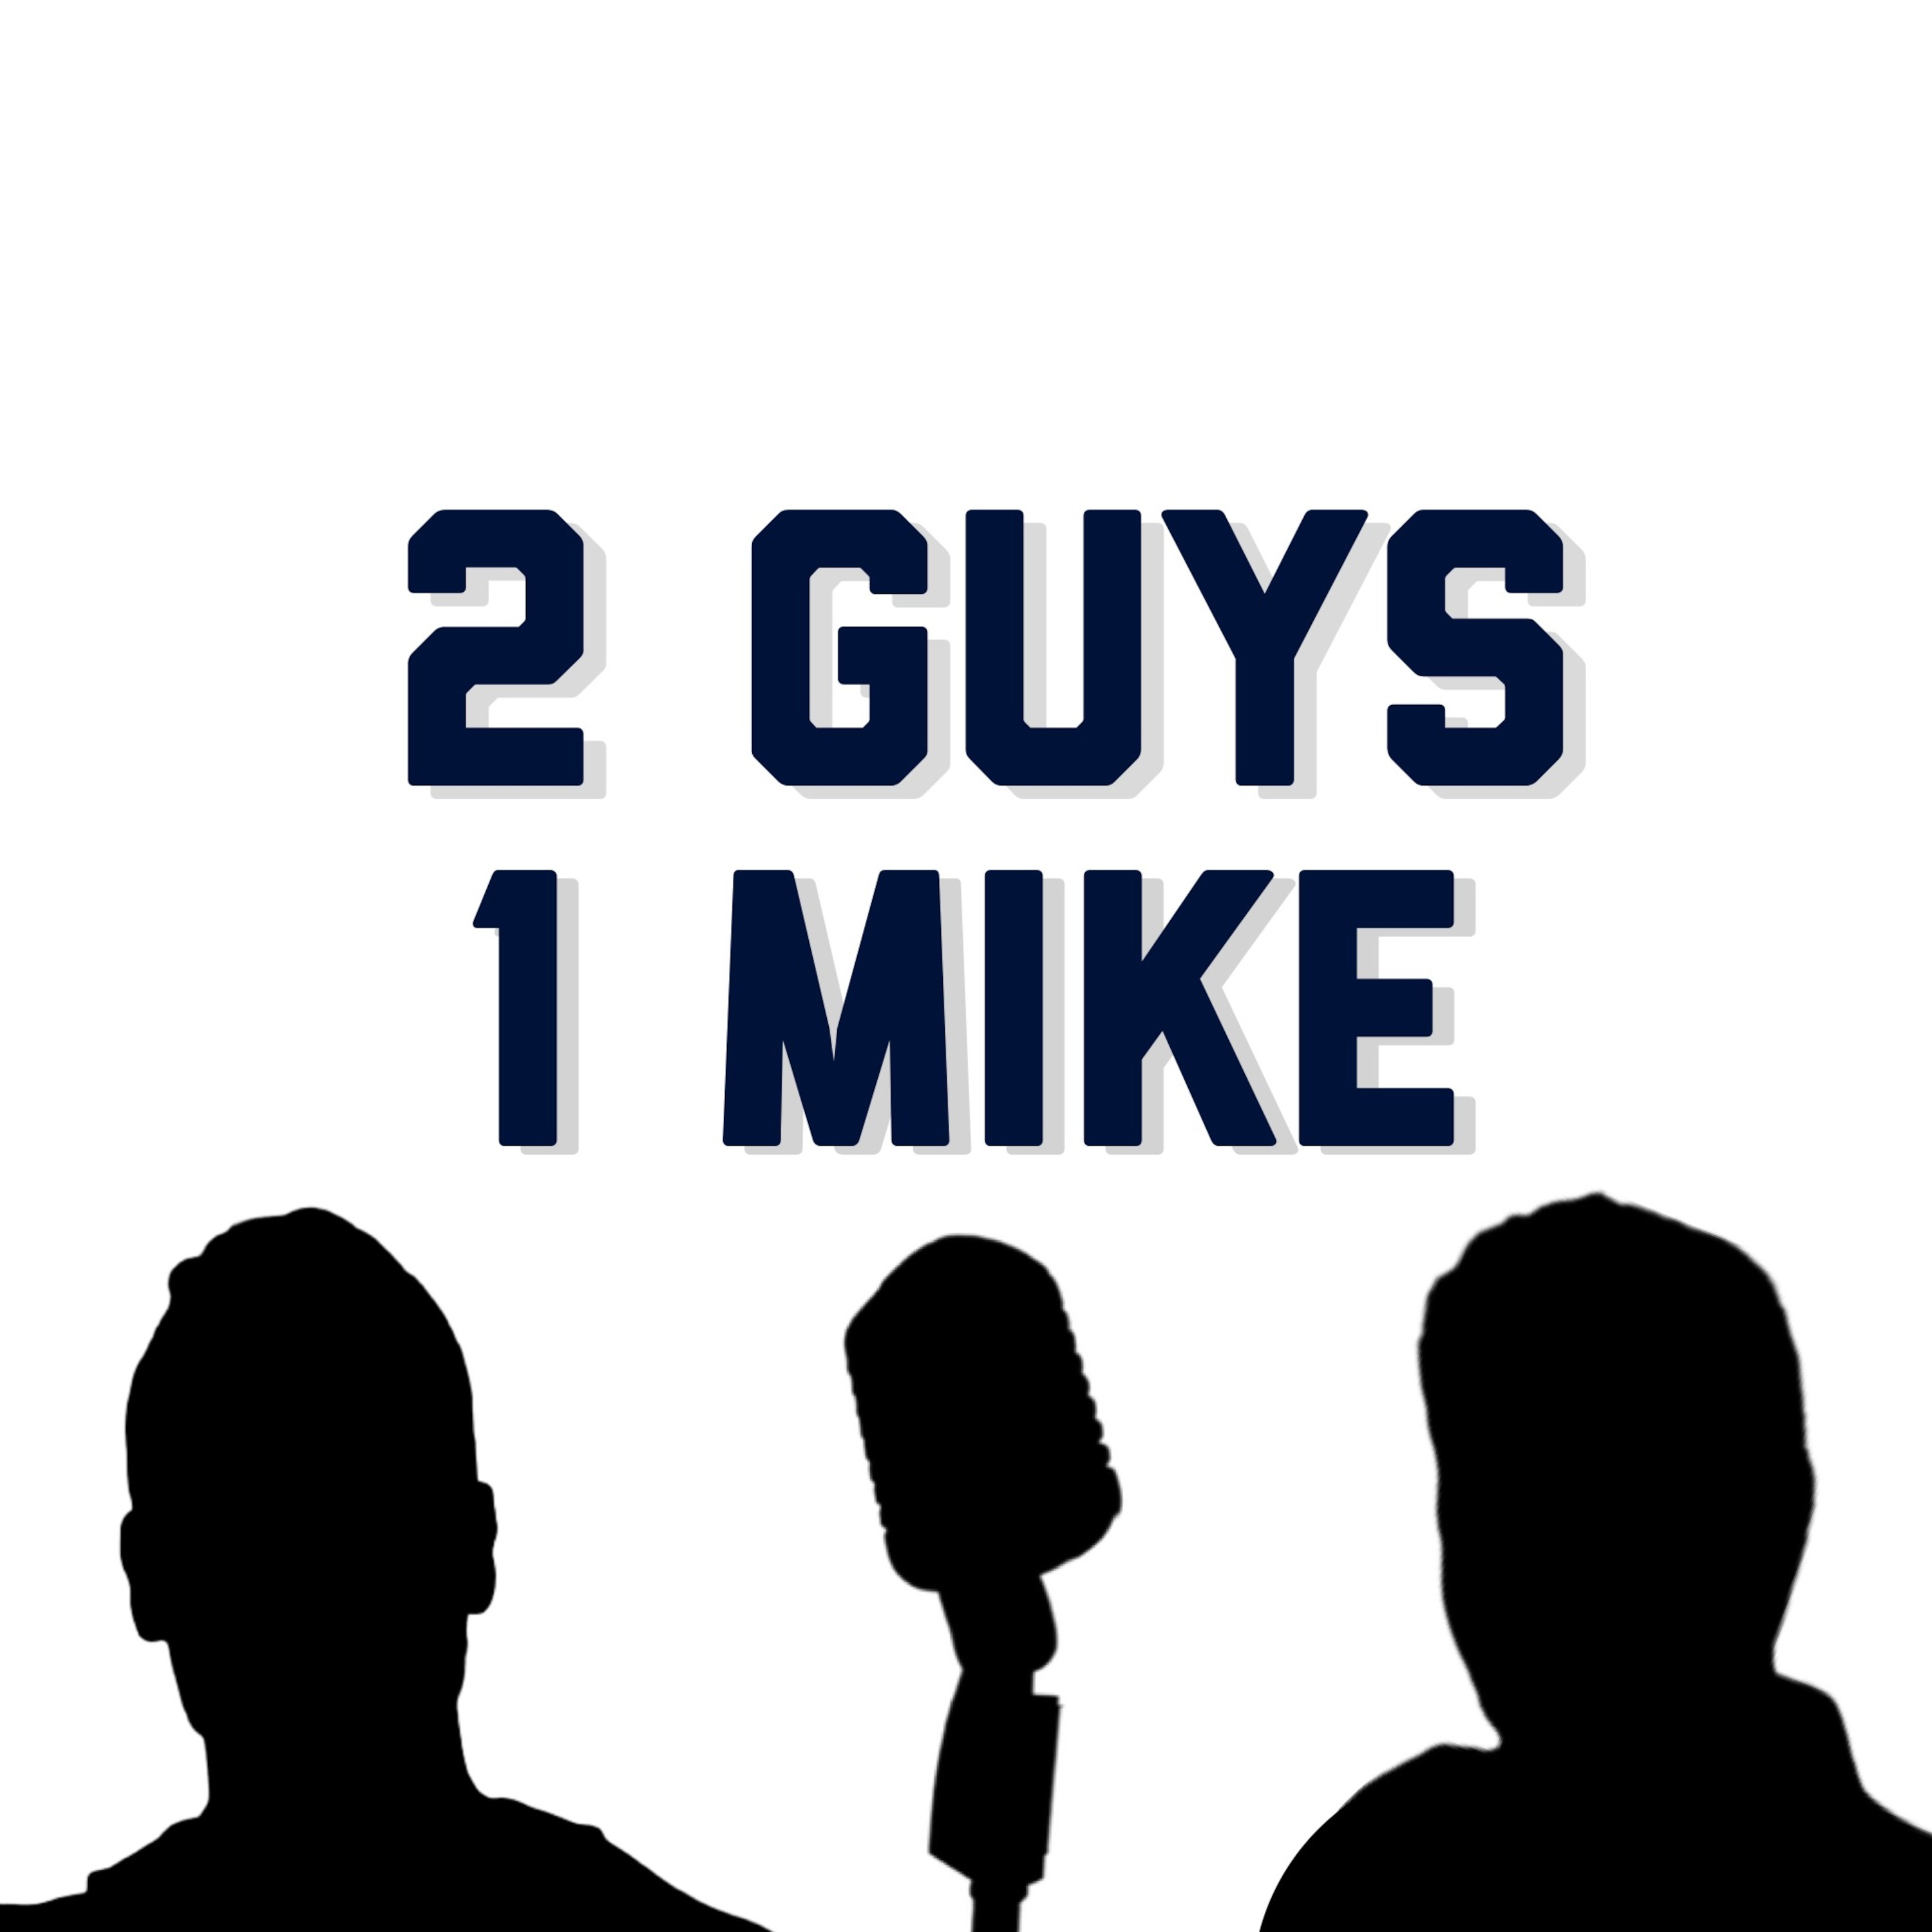 2 guys 1 Mike